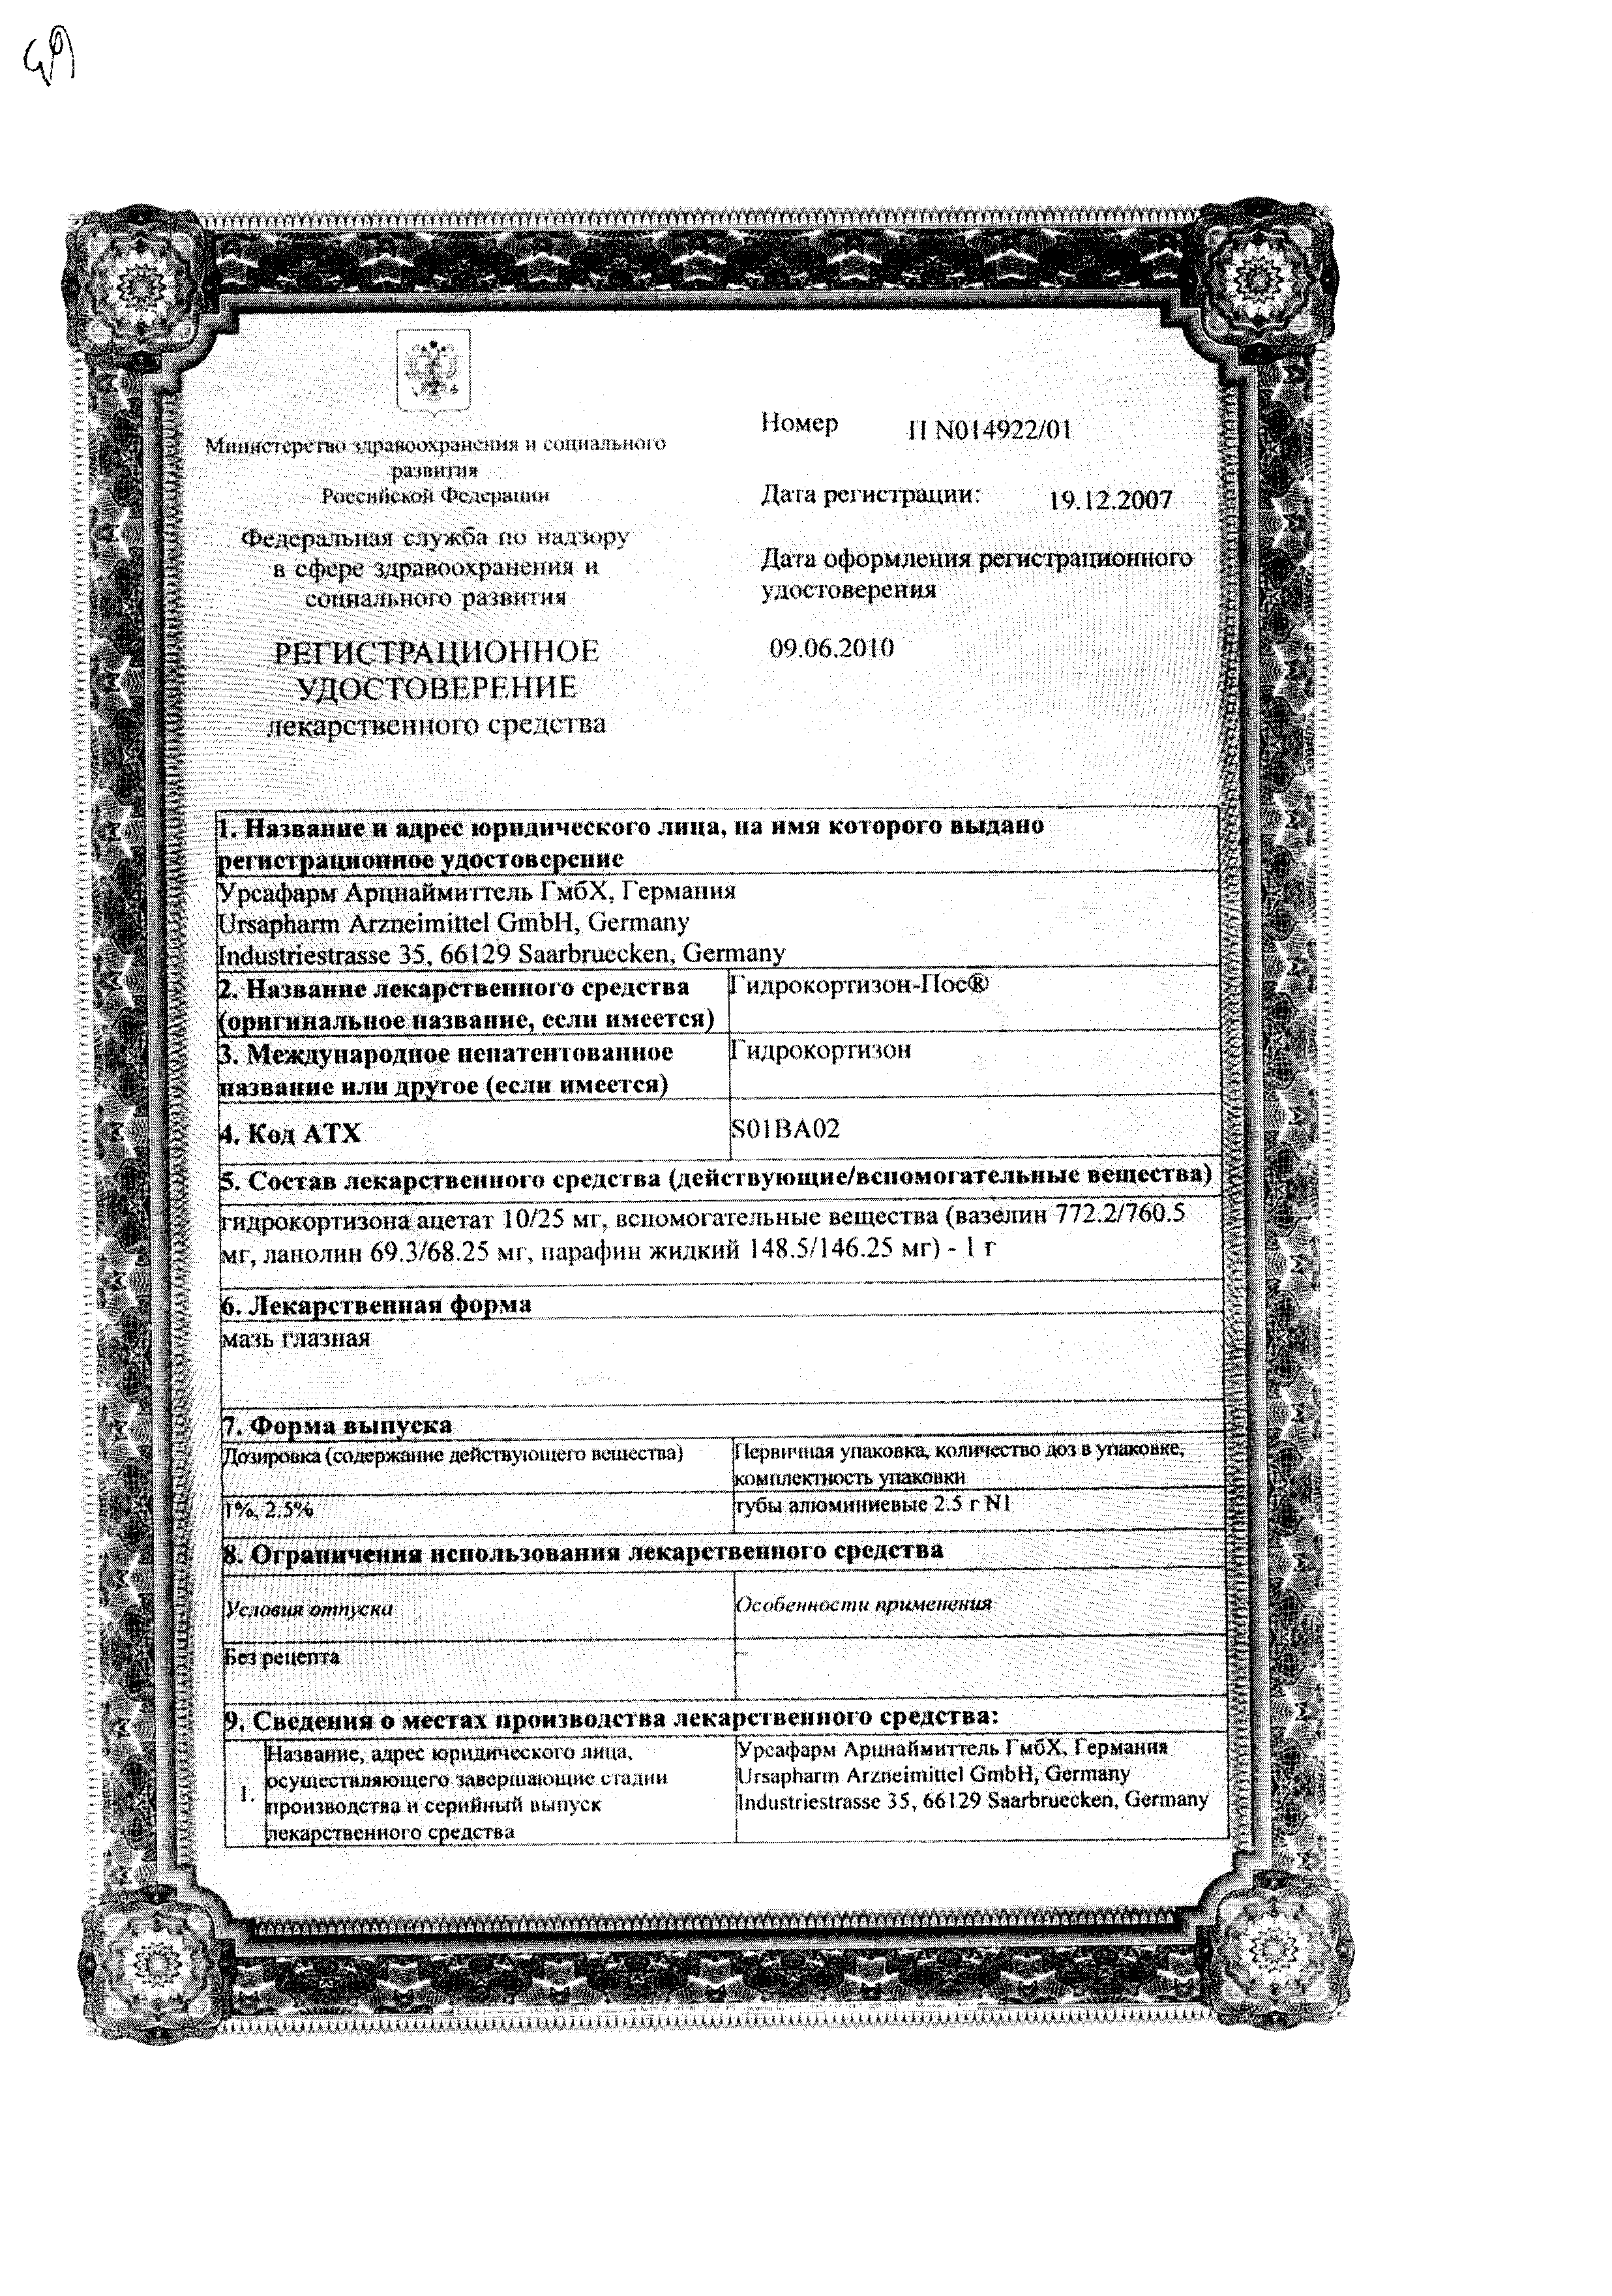 Гидрокортизон-ПОС сертификат